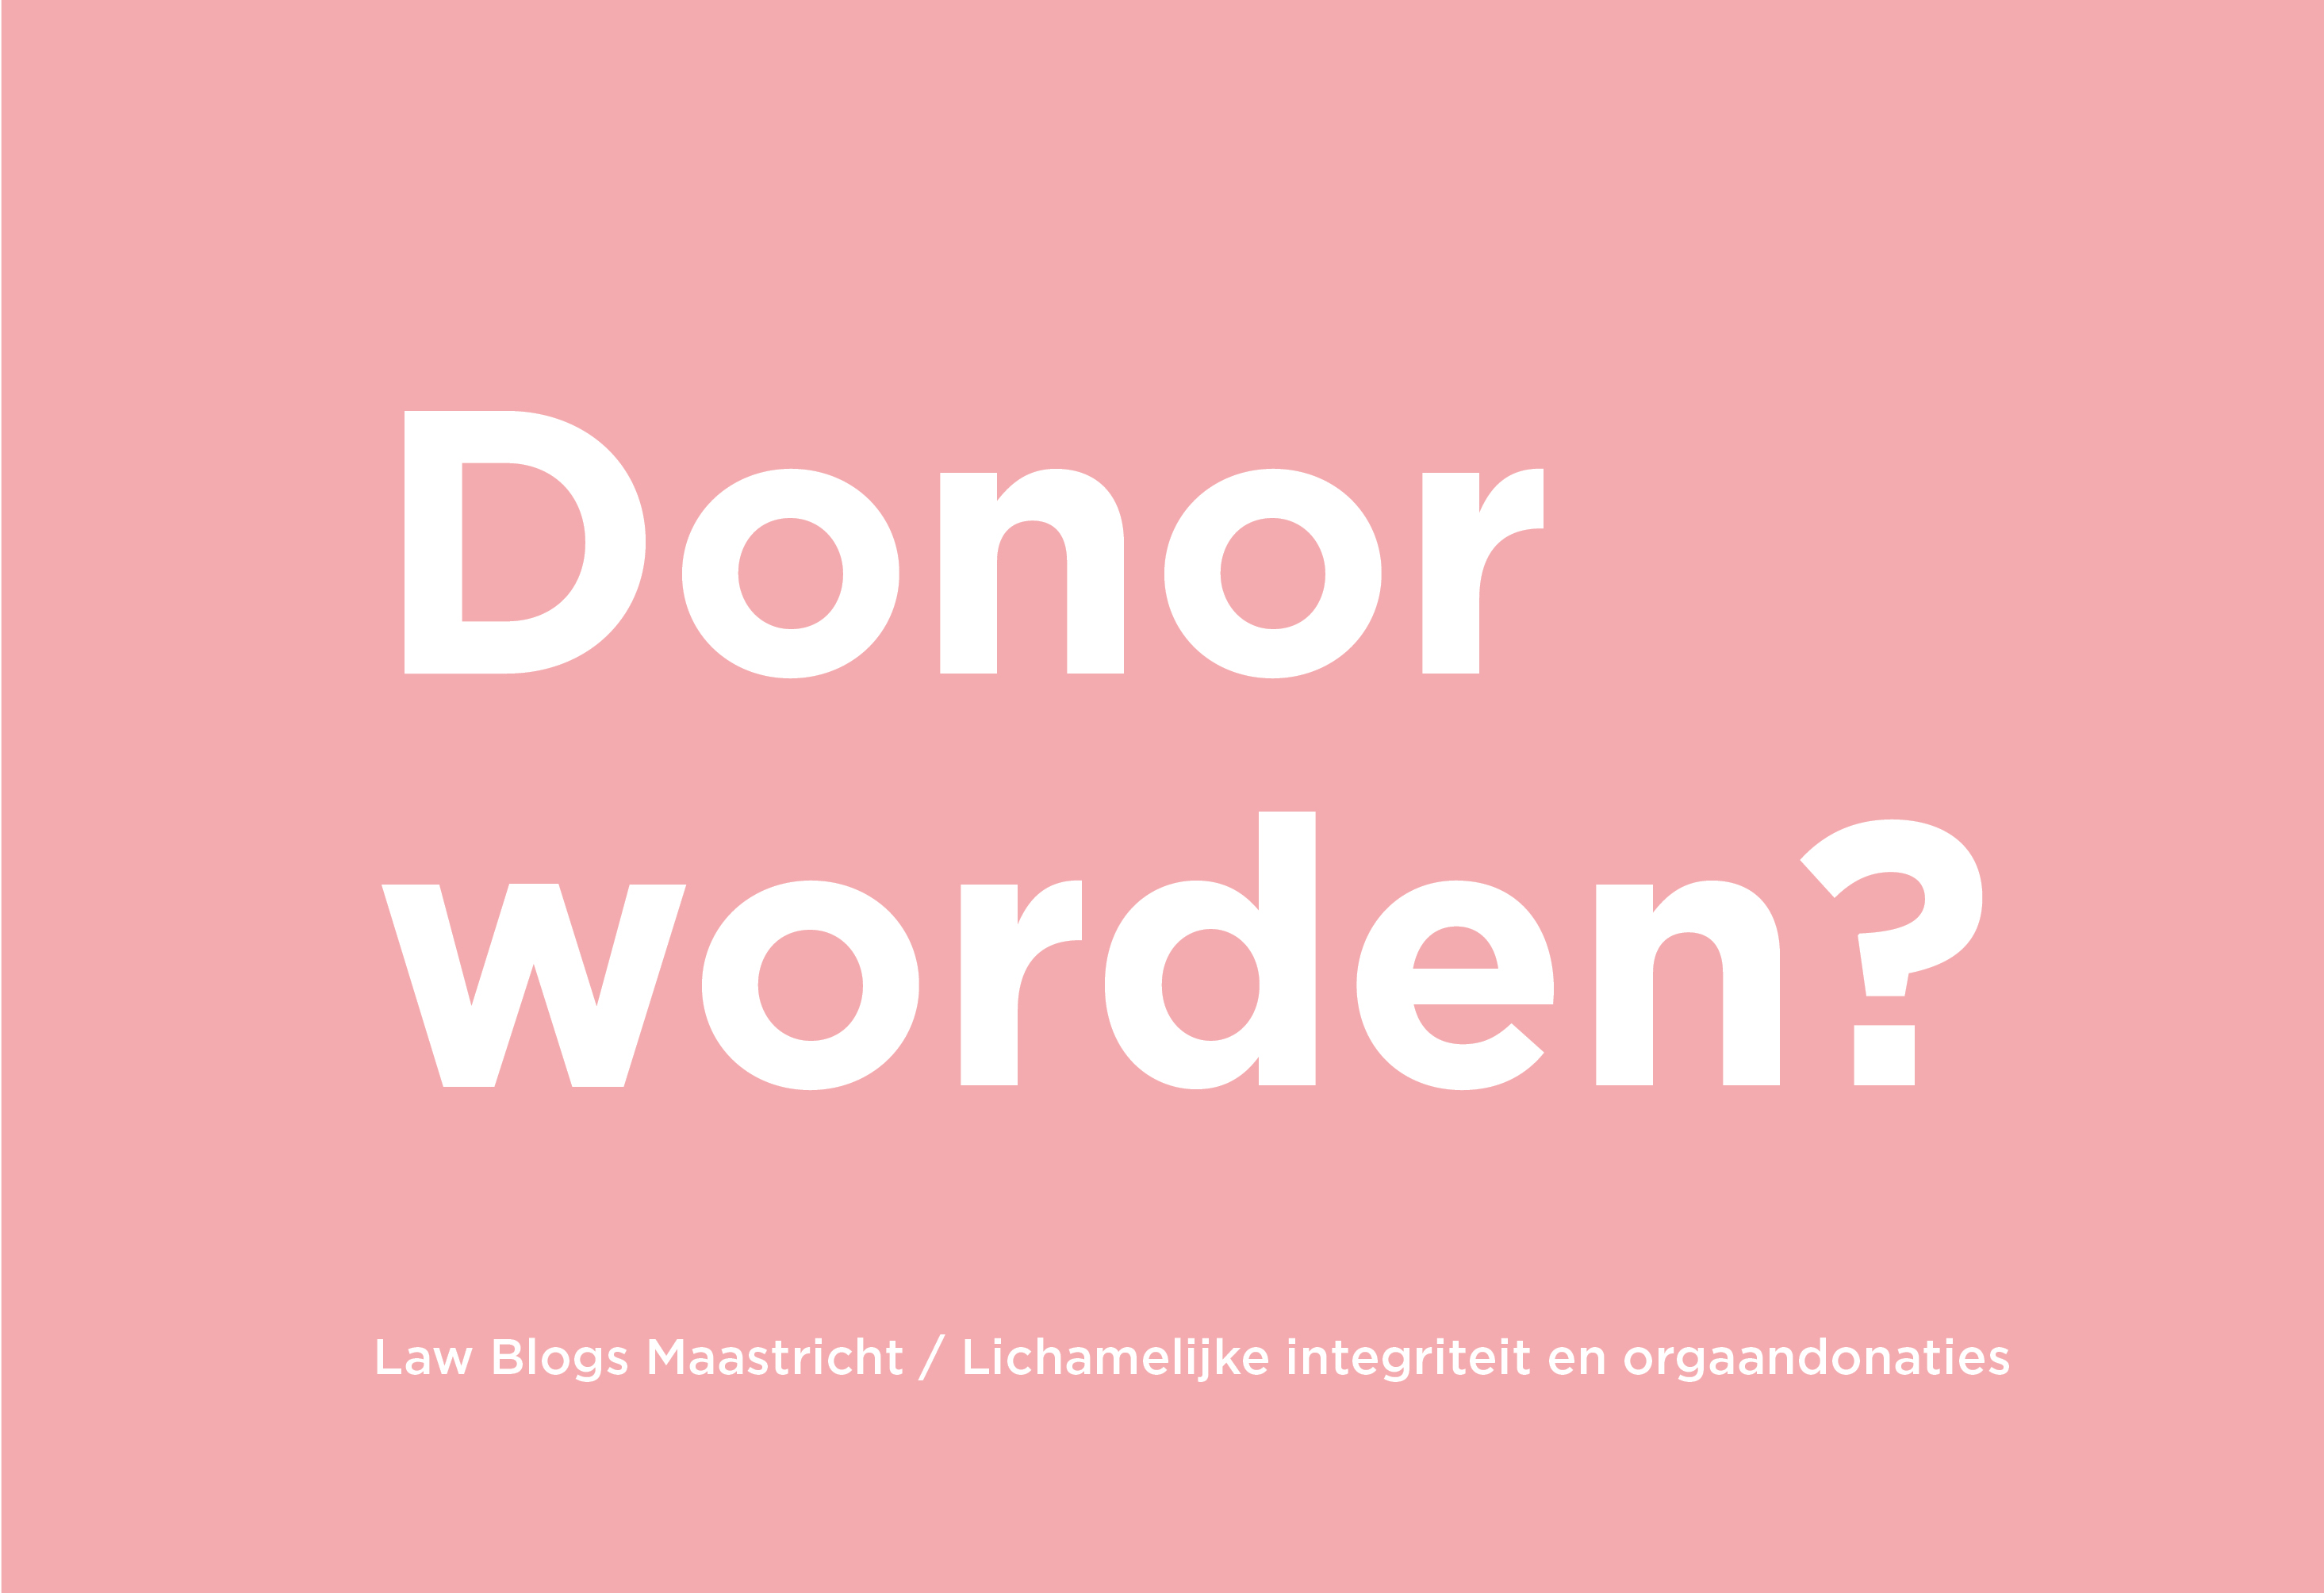 Donor_worden - Law Blogs Maastricht